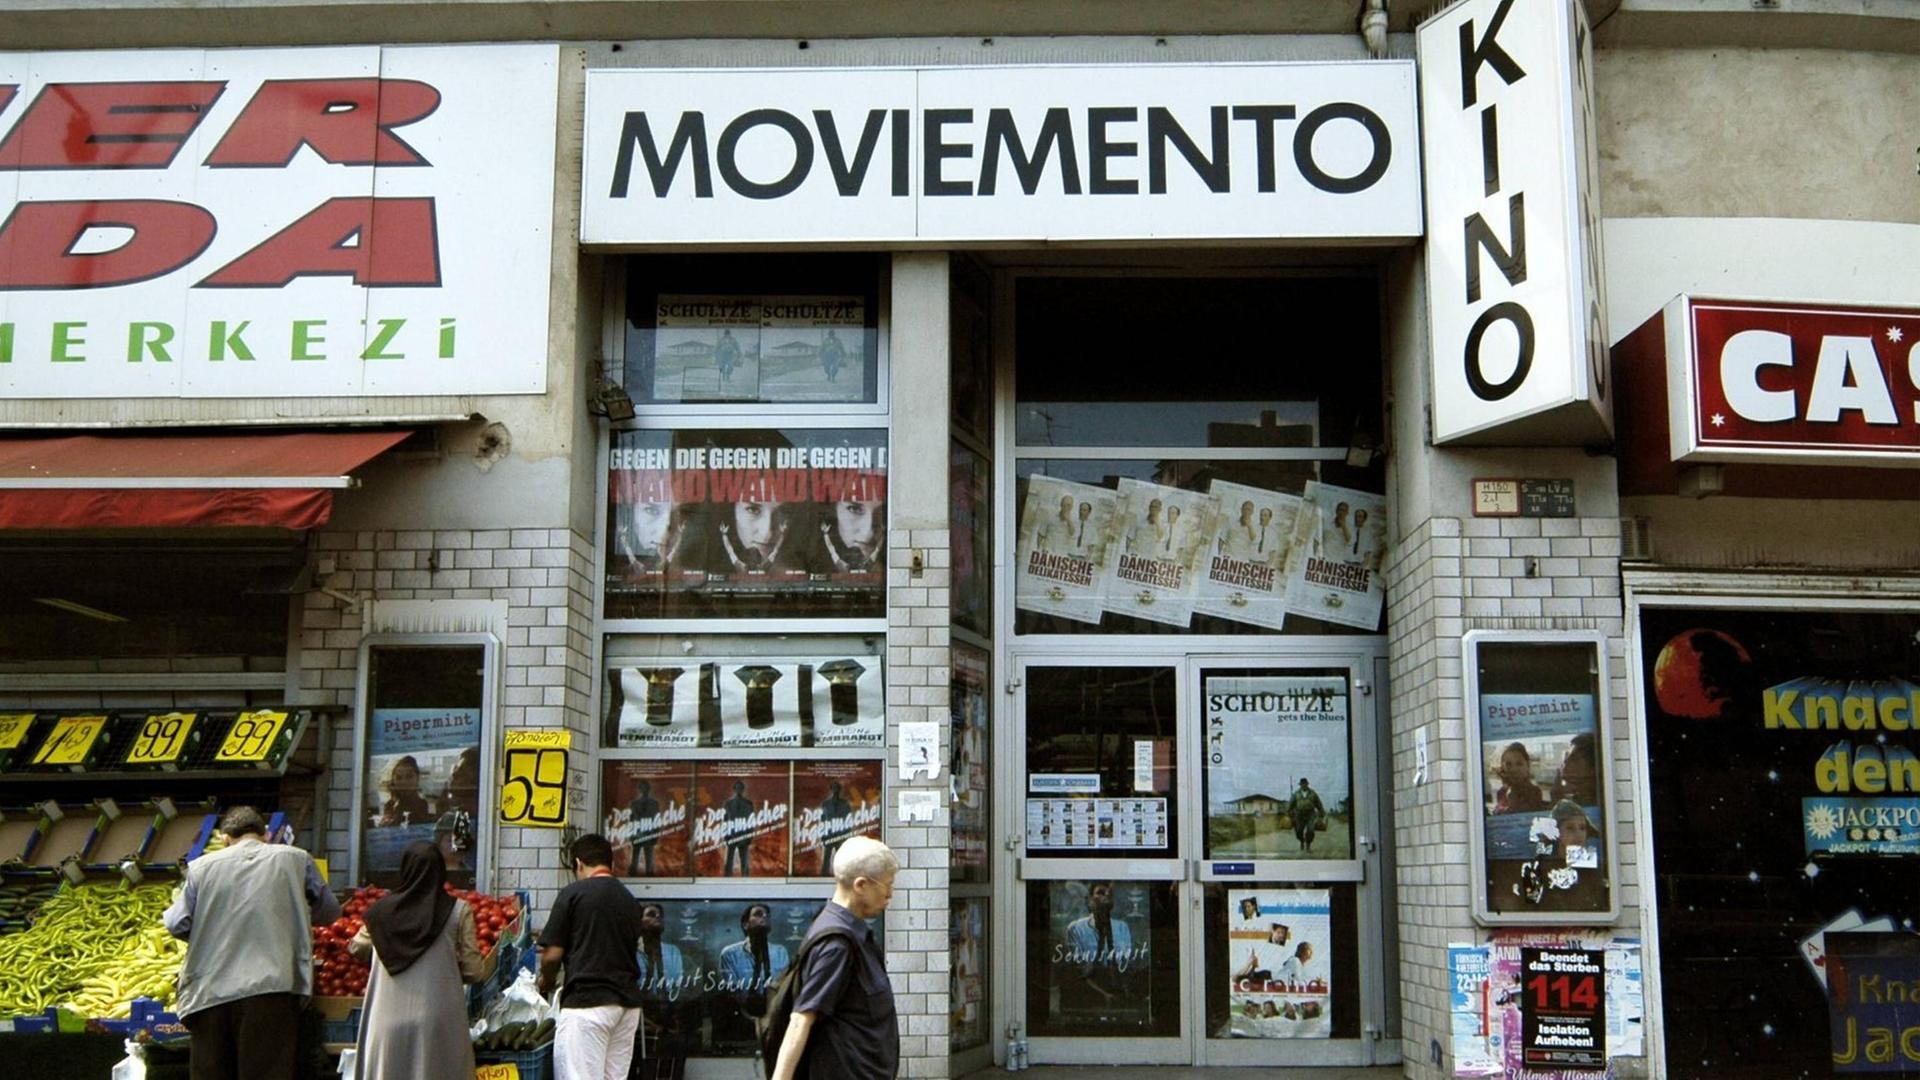 Das Kino "Moviemento" in Berlin-Kreuzberg